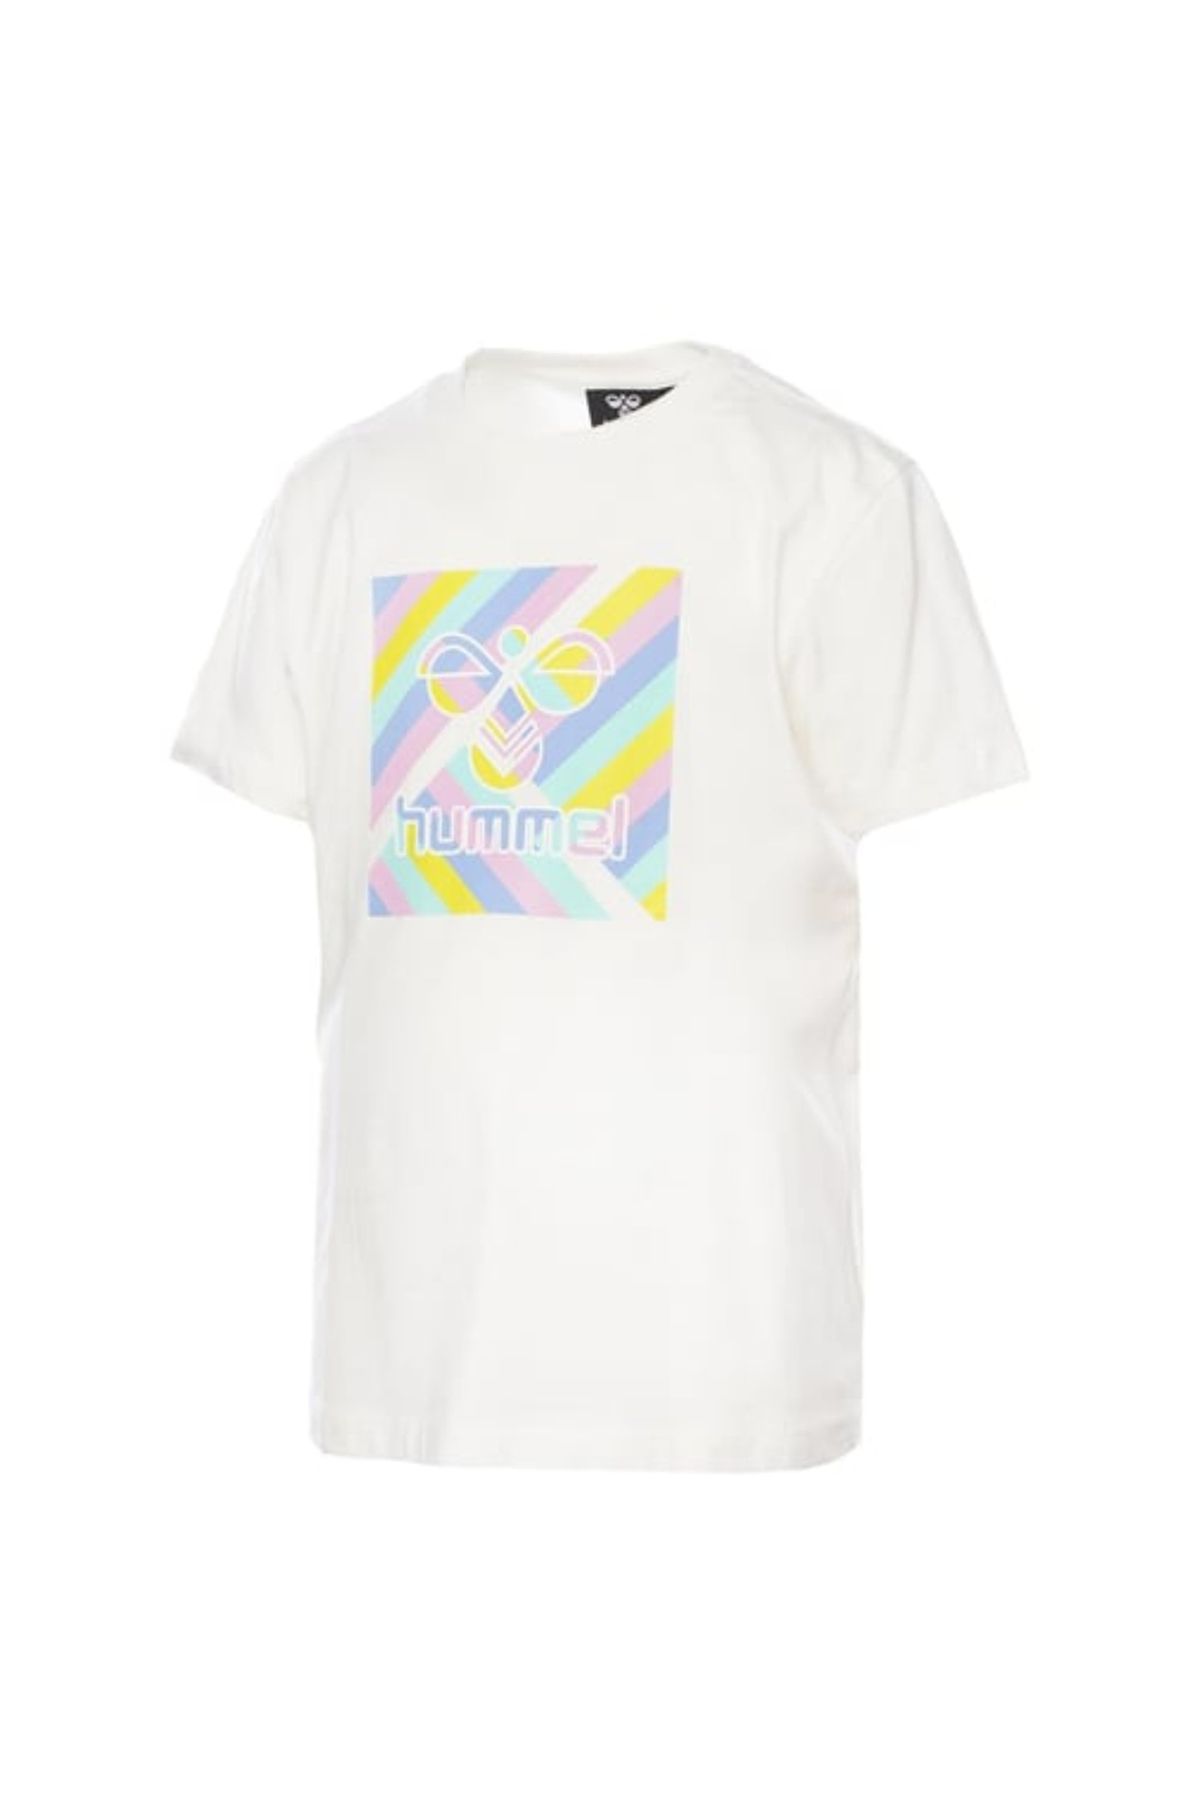 hummel Baskılı Beyaz Kız Çocuk T-Shirt 911791-9003-HMLCHO T-SHIRT S/S